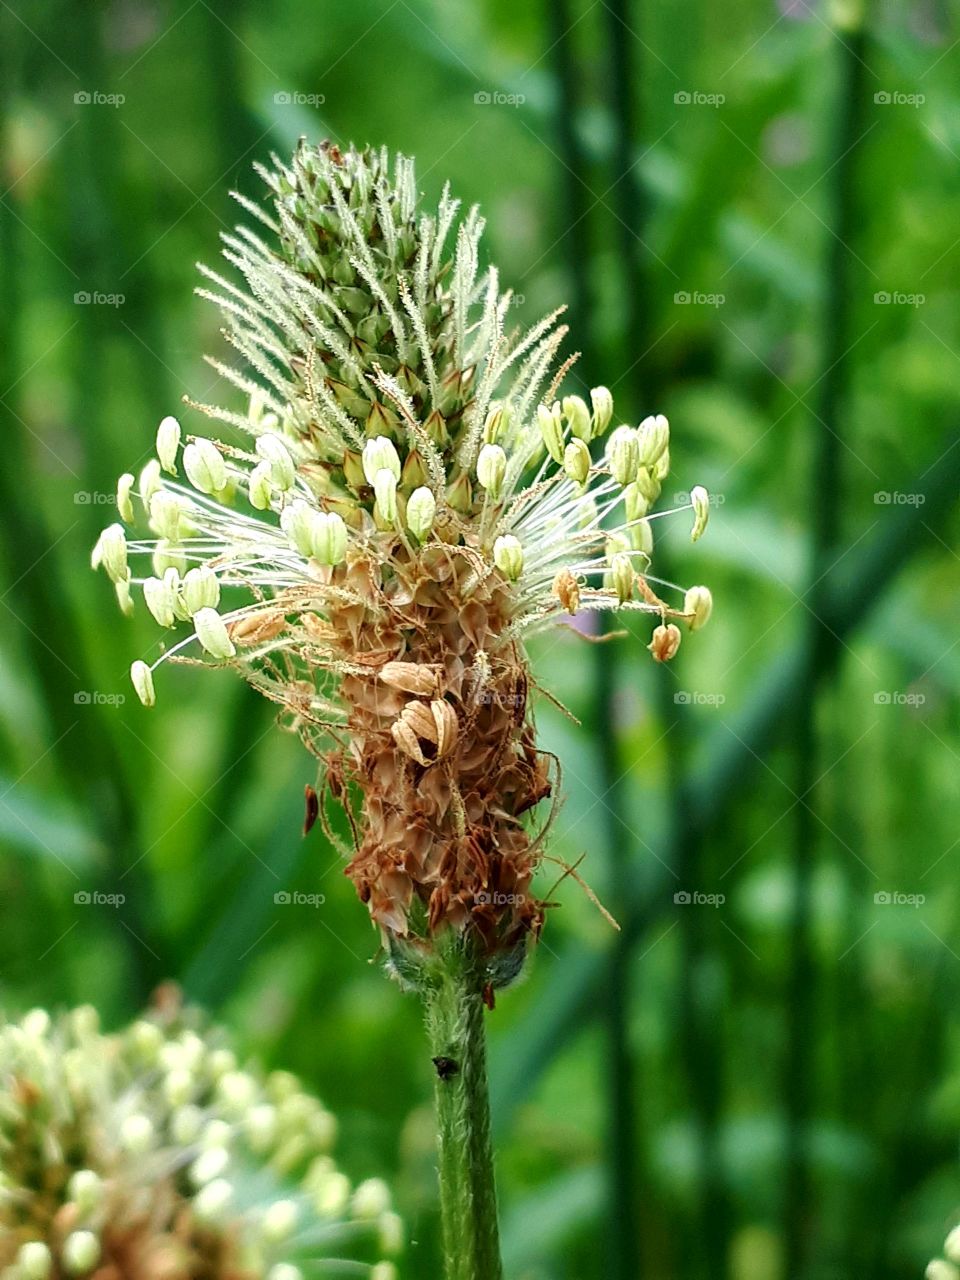 Grass (trputac)